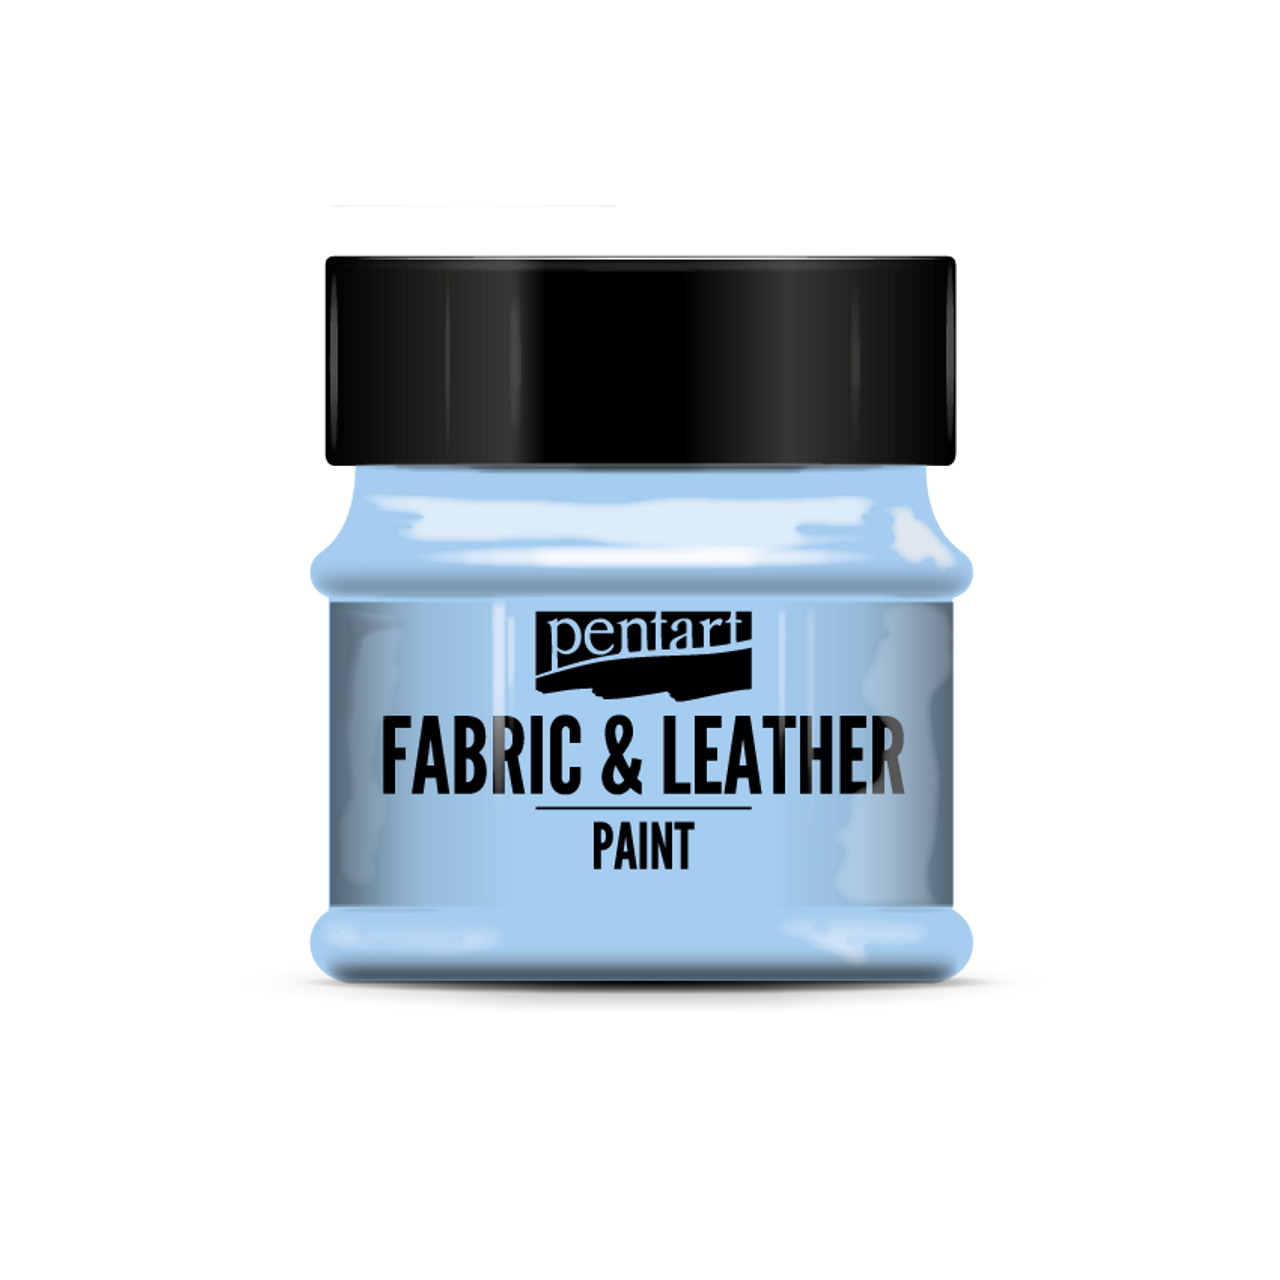 Pentart Fabric & Leather Paint - Decoupage Queen